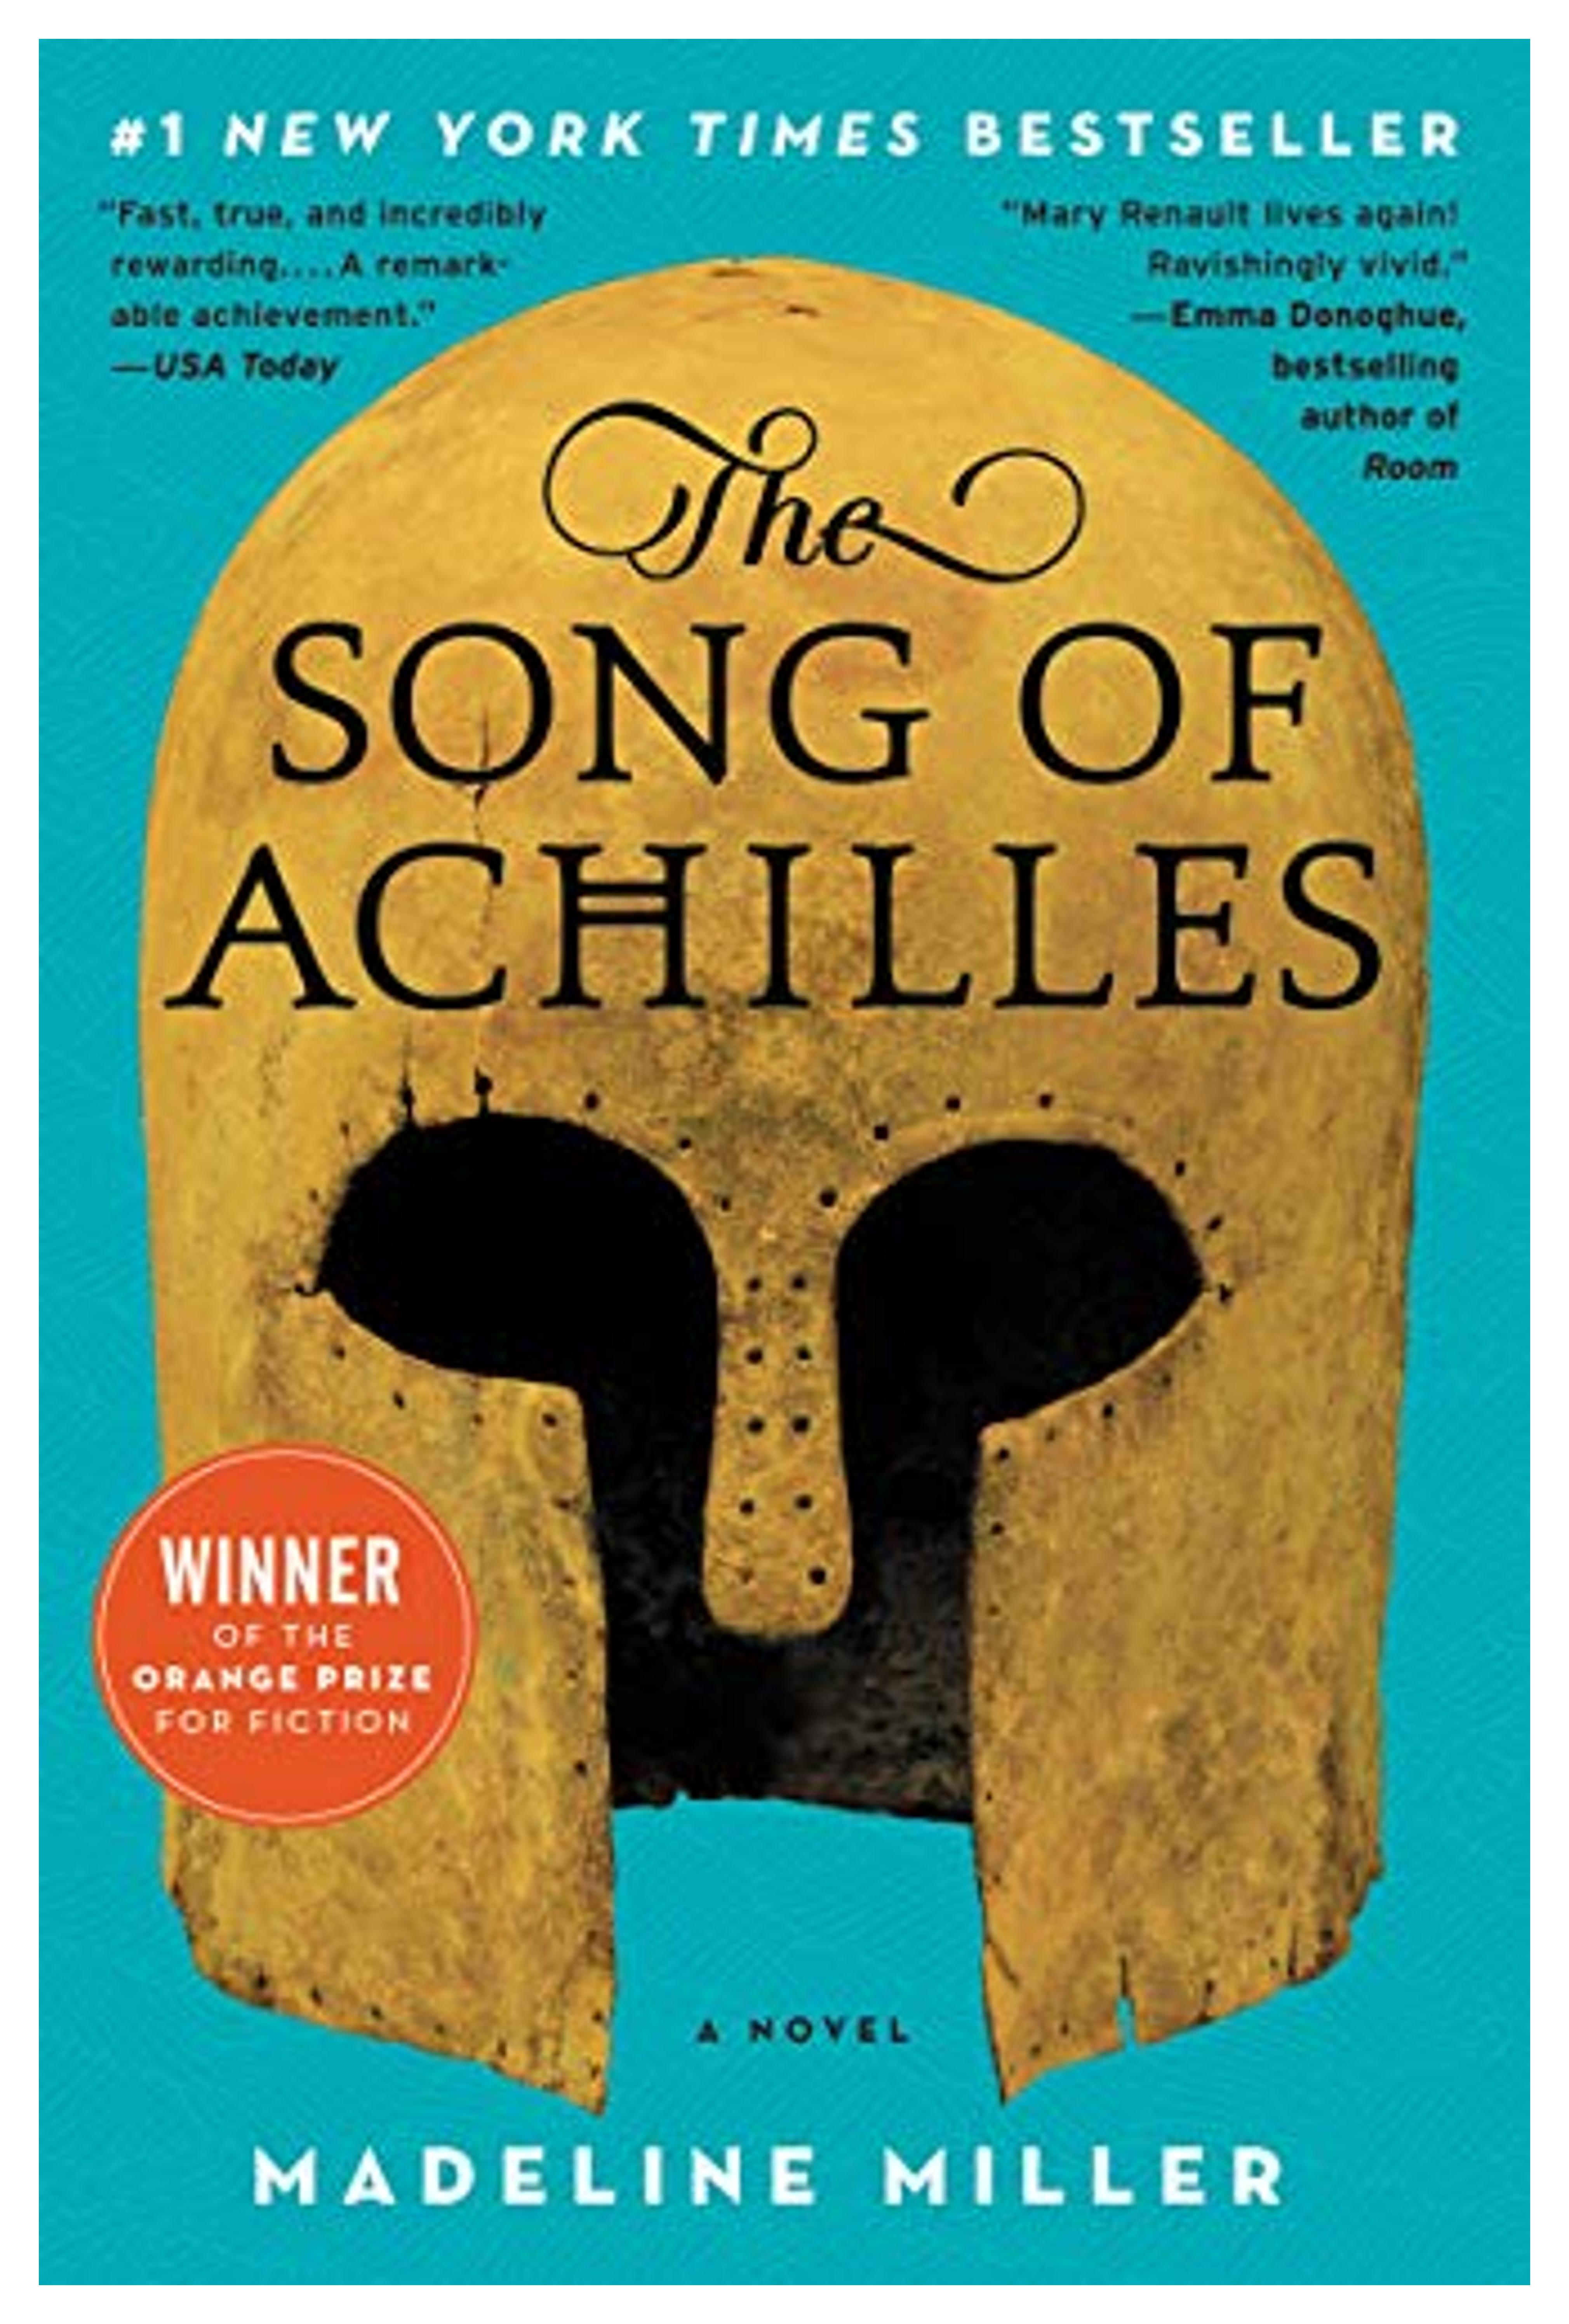 Amazon.com: The Song of Achilles: A Novel: 9780062060624: Miller, Madeline: Books